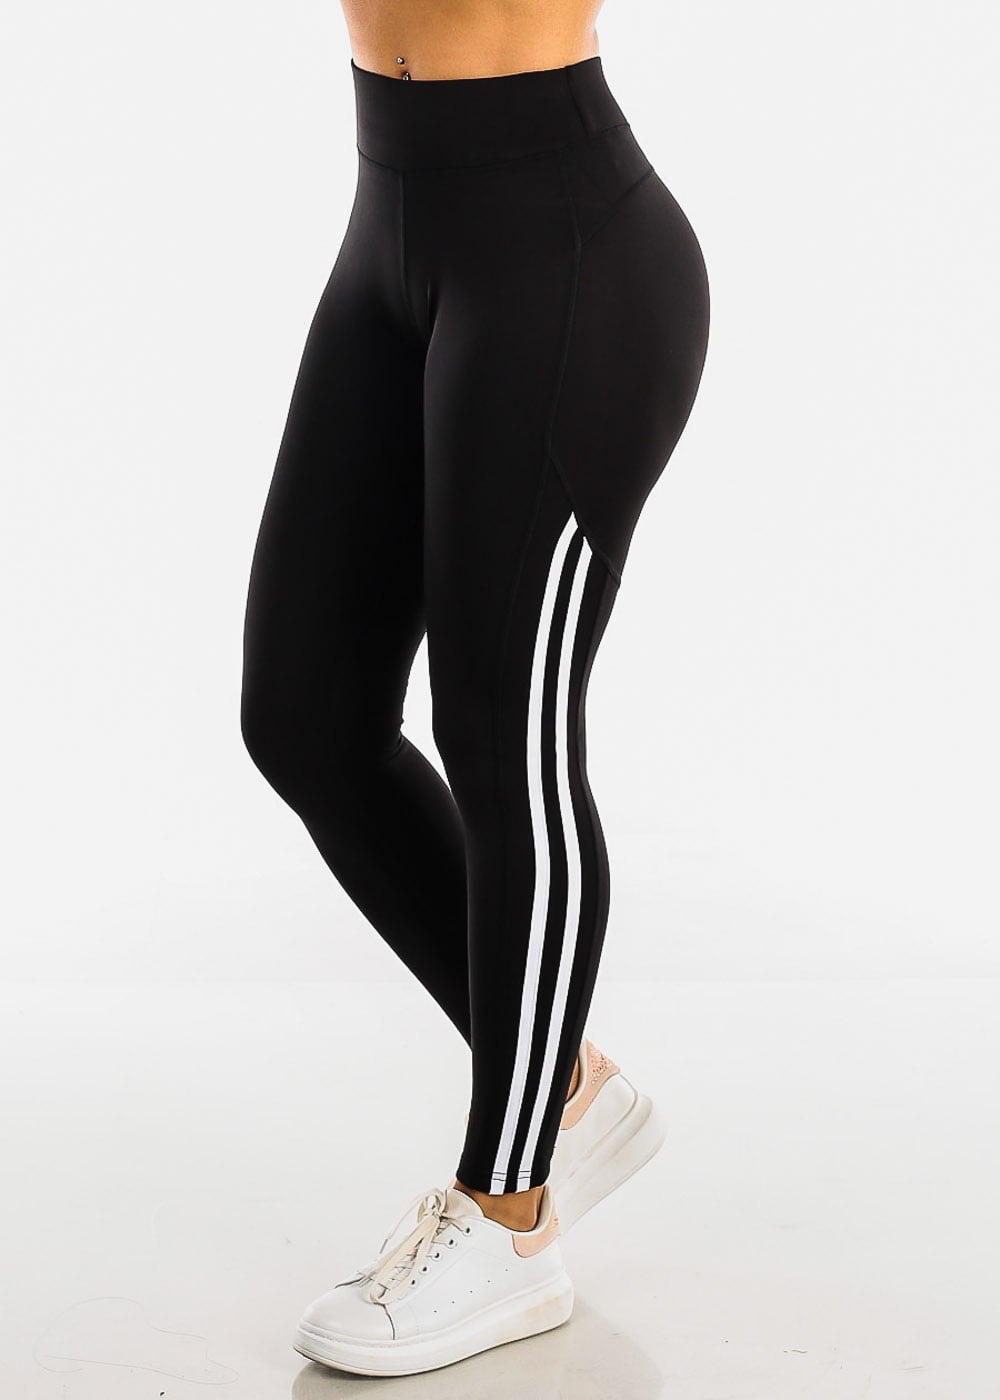 Buy Bamans Women's Skinny Leg Work Pull on Slim Stretch Yoga